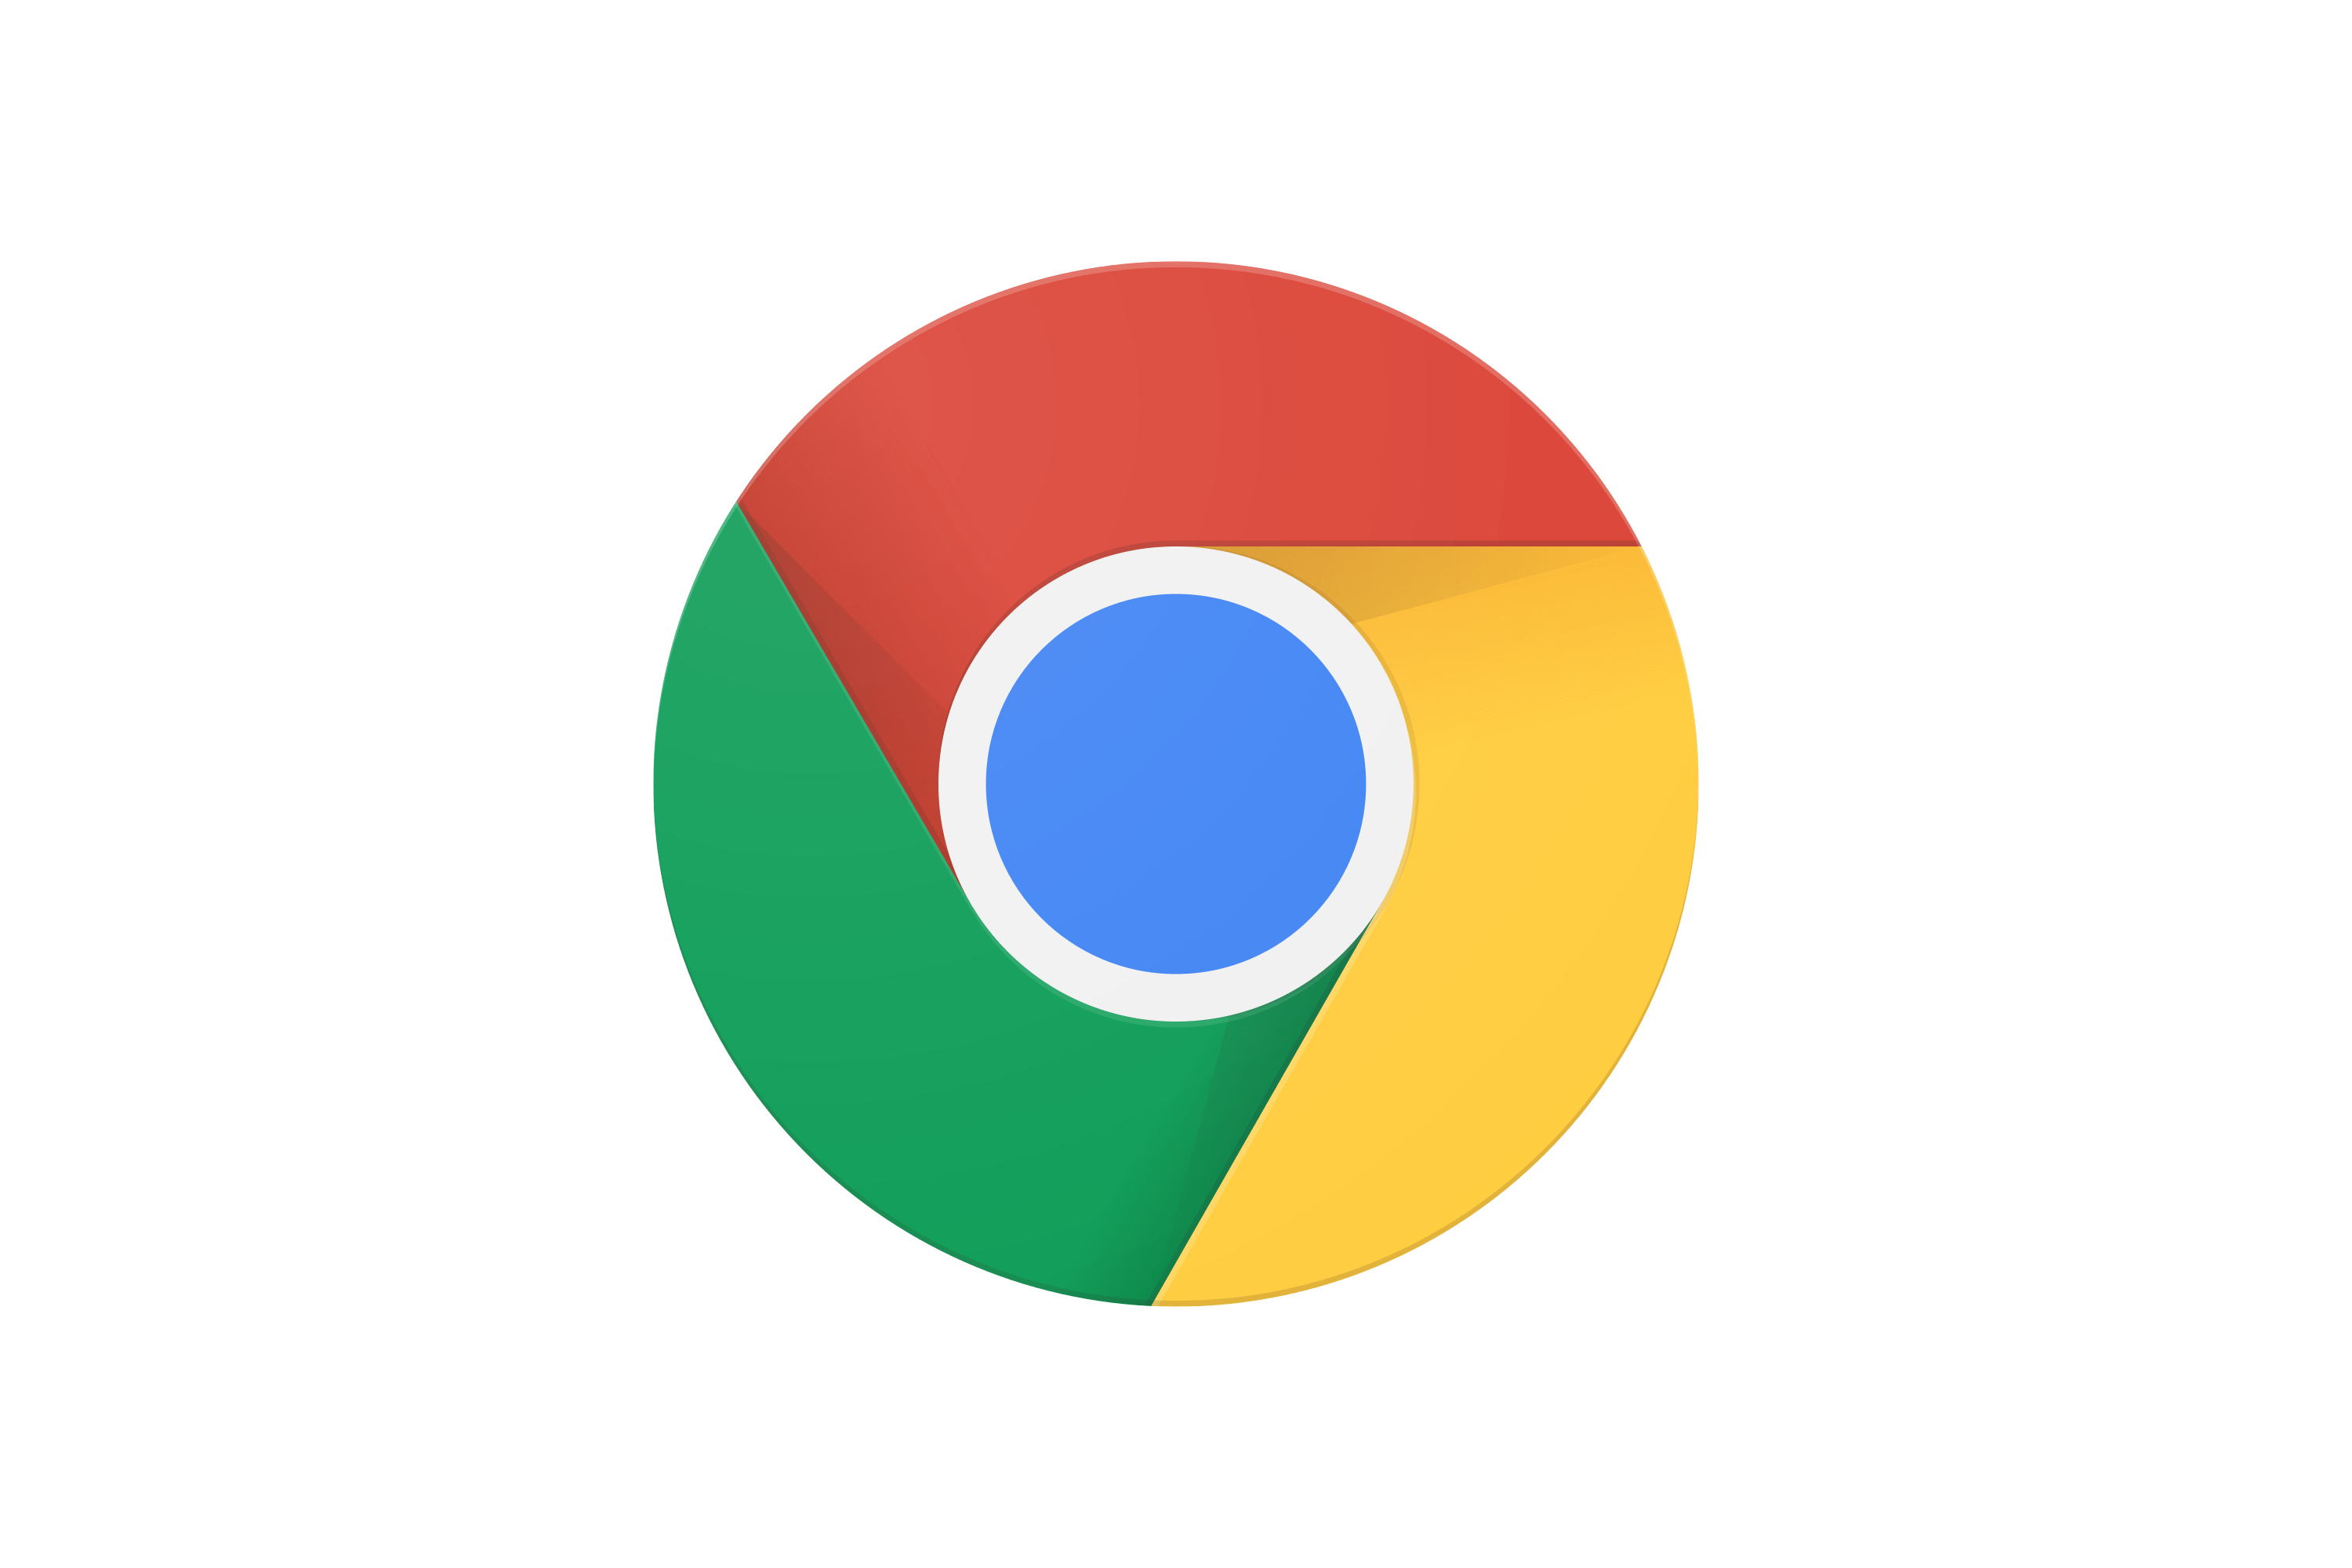 Download Google Chrome Logo in SVG Vector or PNG File Format ...